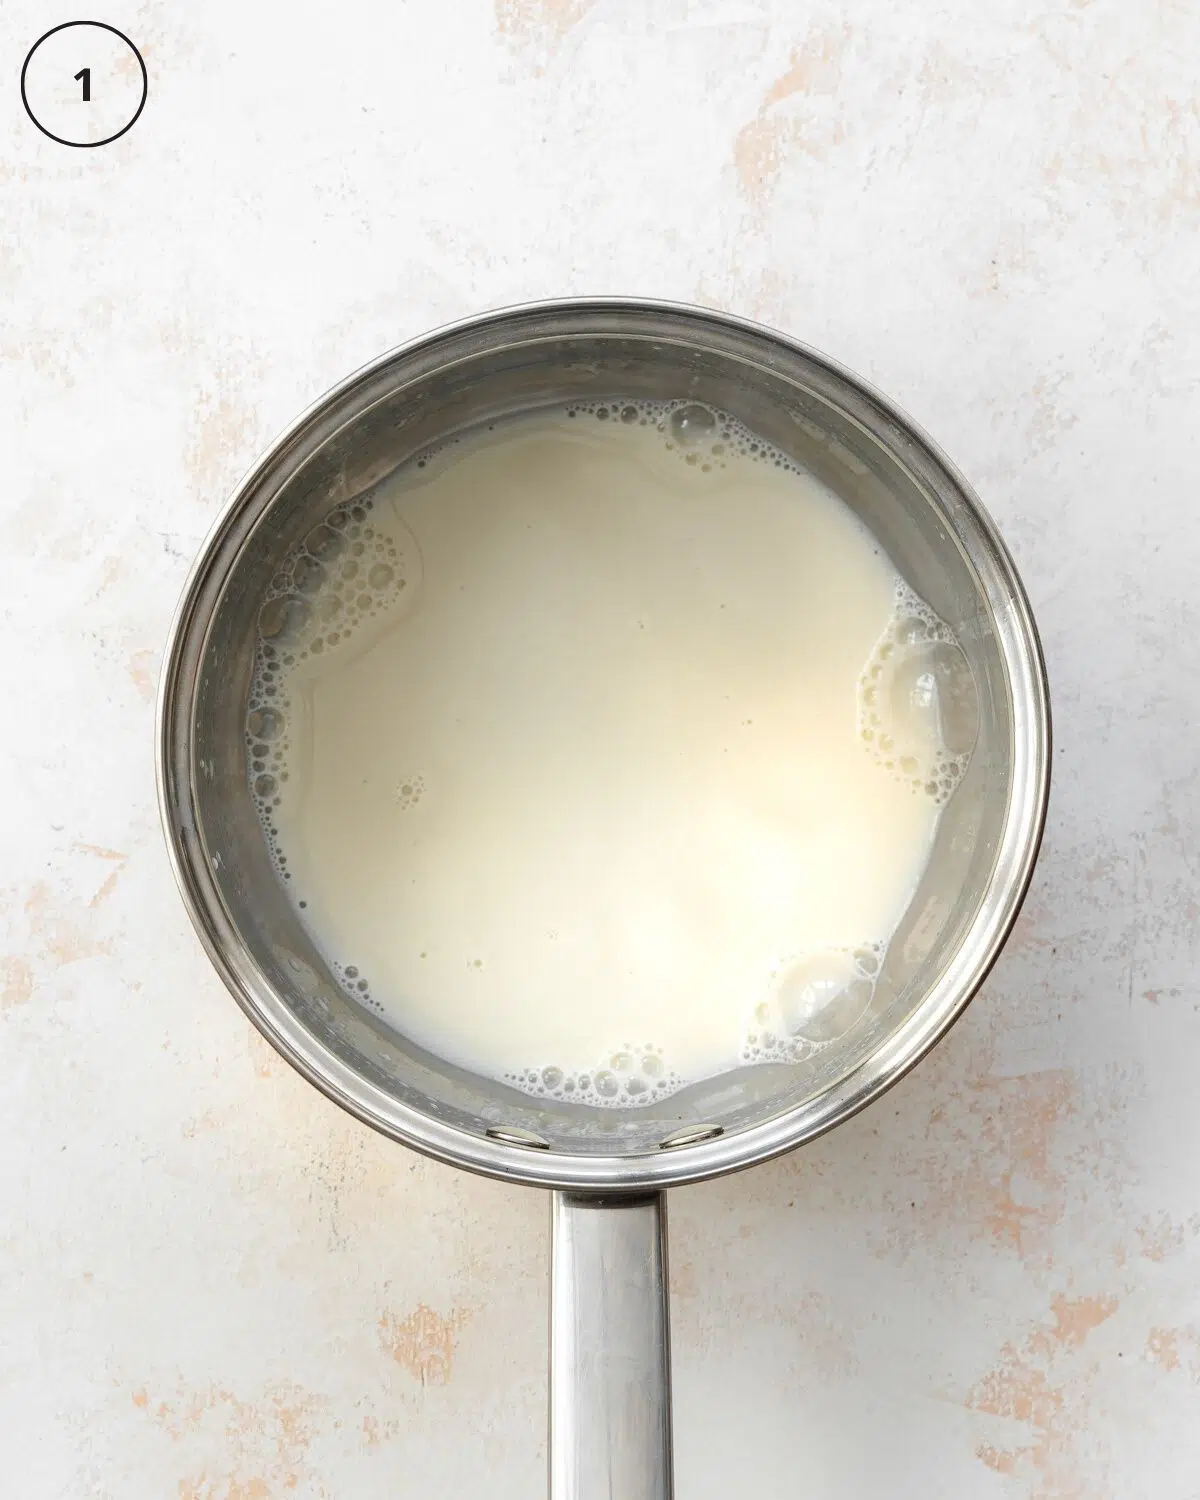 plantbased milk in a saucepan.